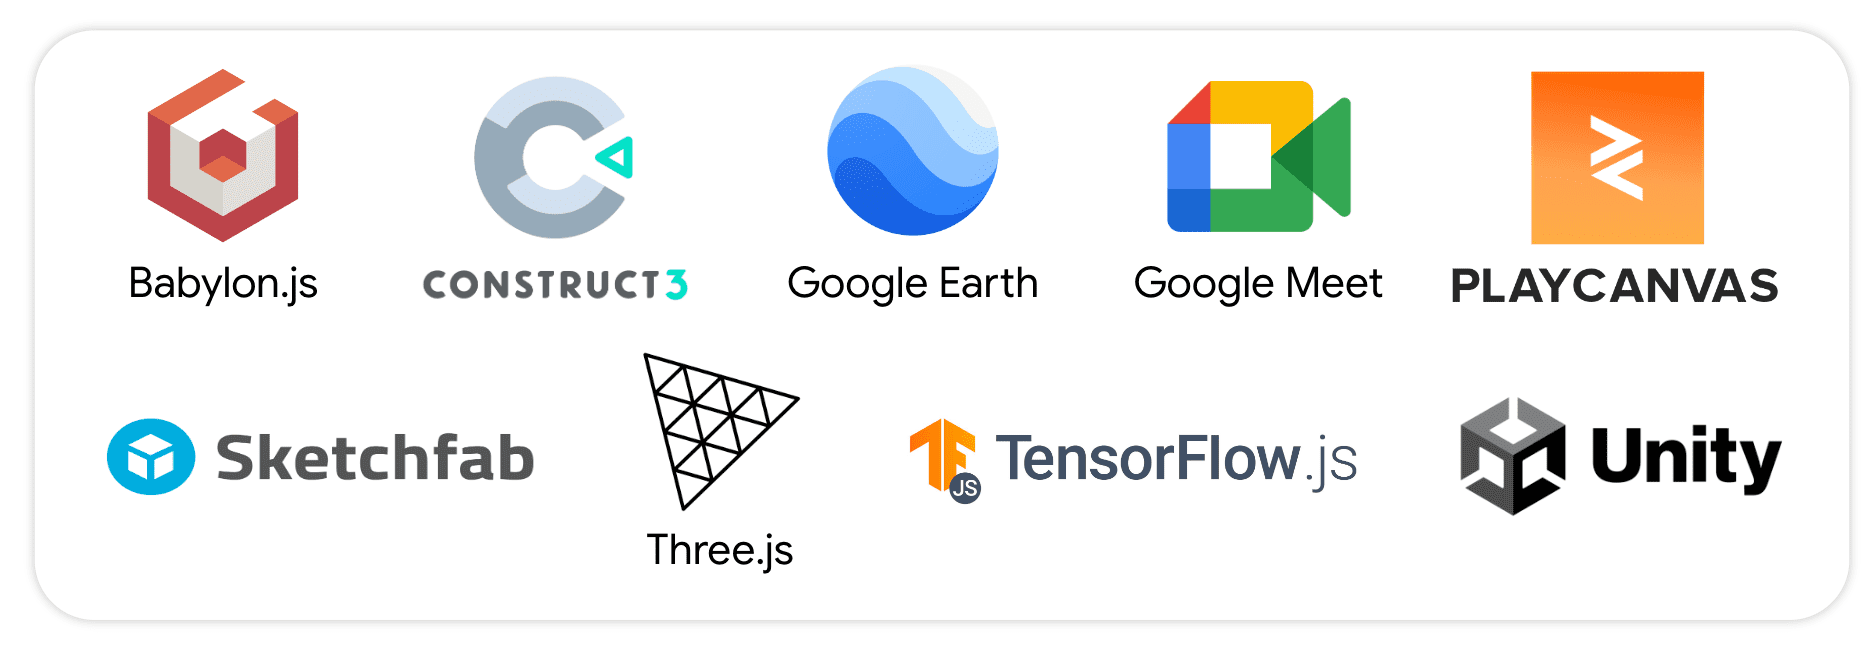 Babylon.js, Construct 3, Google Earth, Google Meet, PlayCanvas, Sketchfab, Three.JS, TensorFlow.js, और Unity.